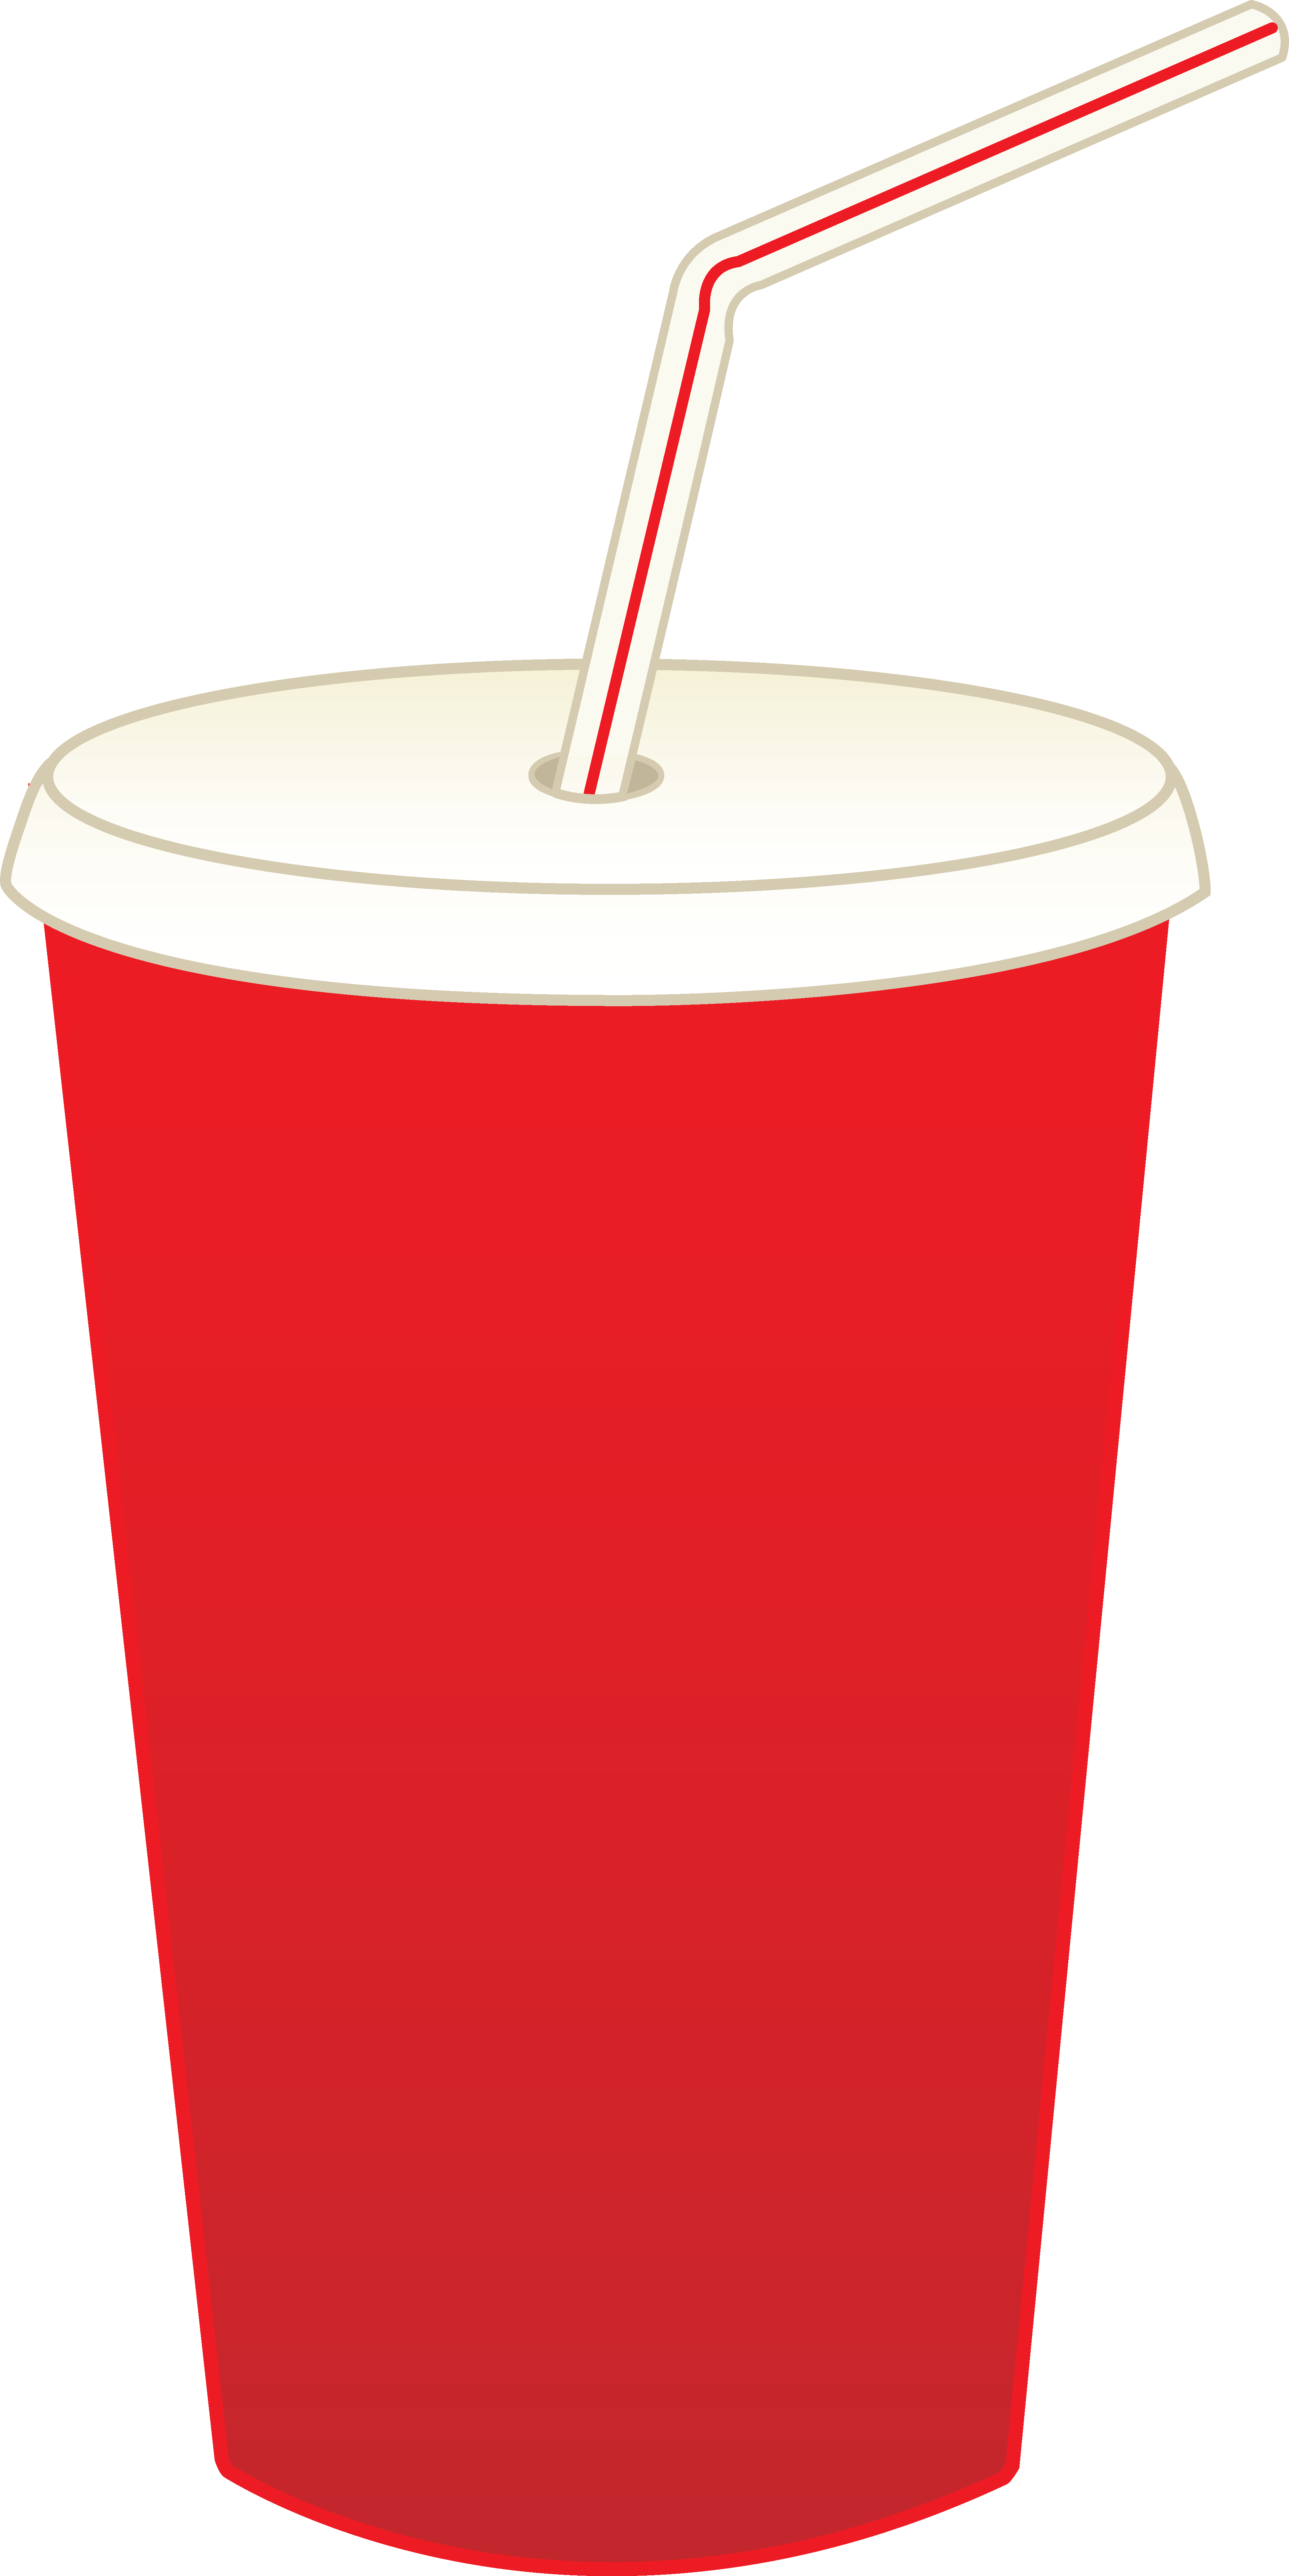 Soda Pop Soft Drink Cup Straw Clip Art